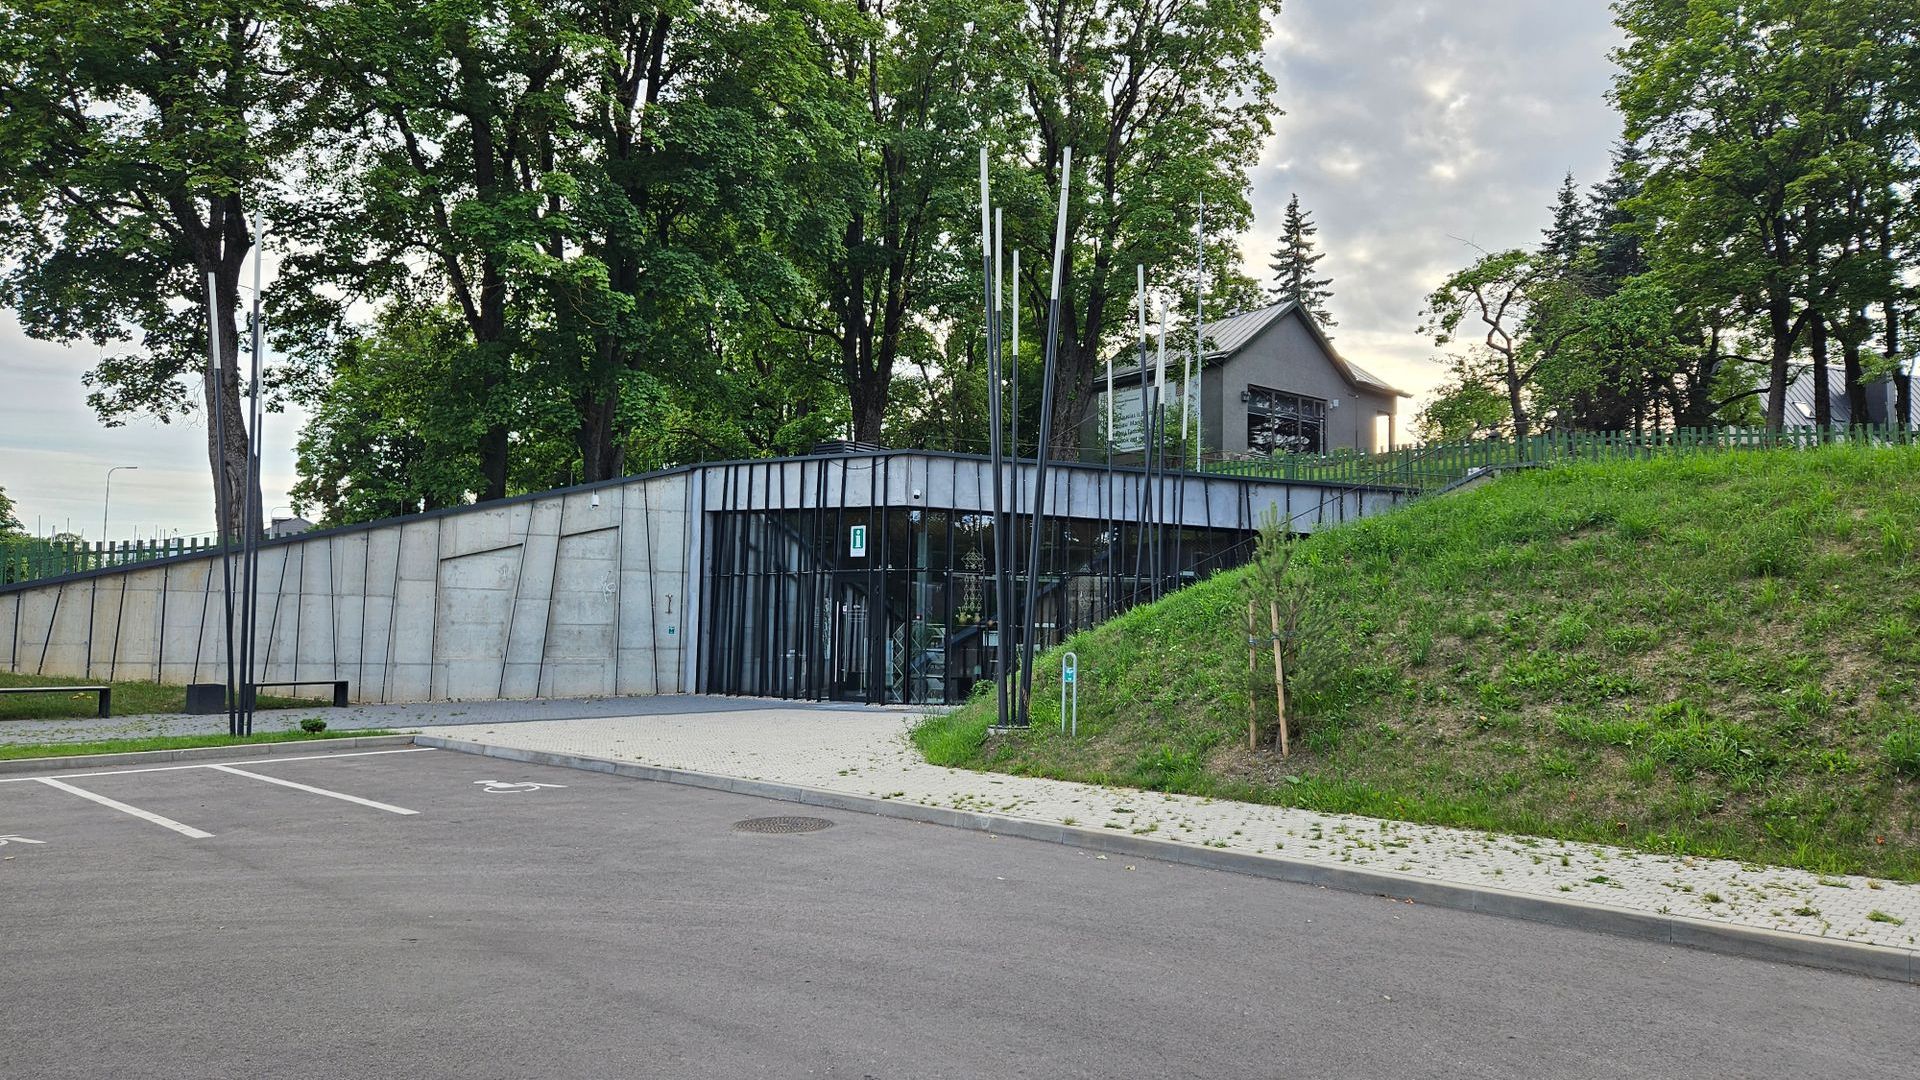 Anykščiai Tourism and Business Information Center